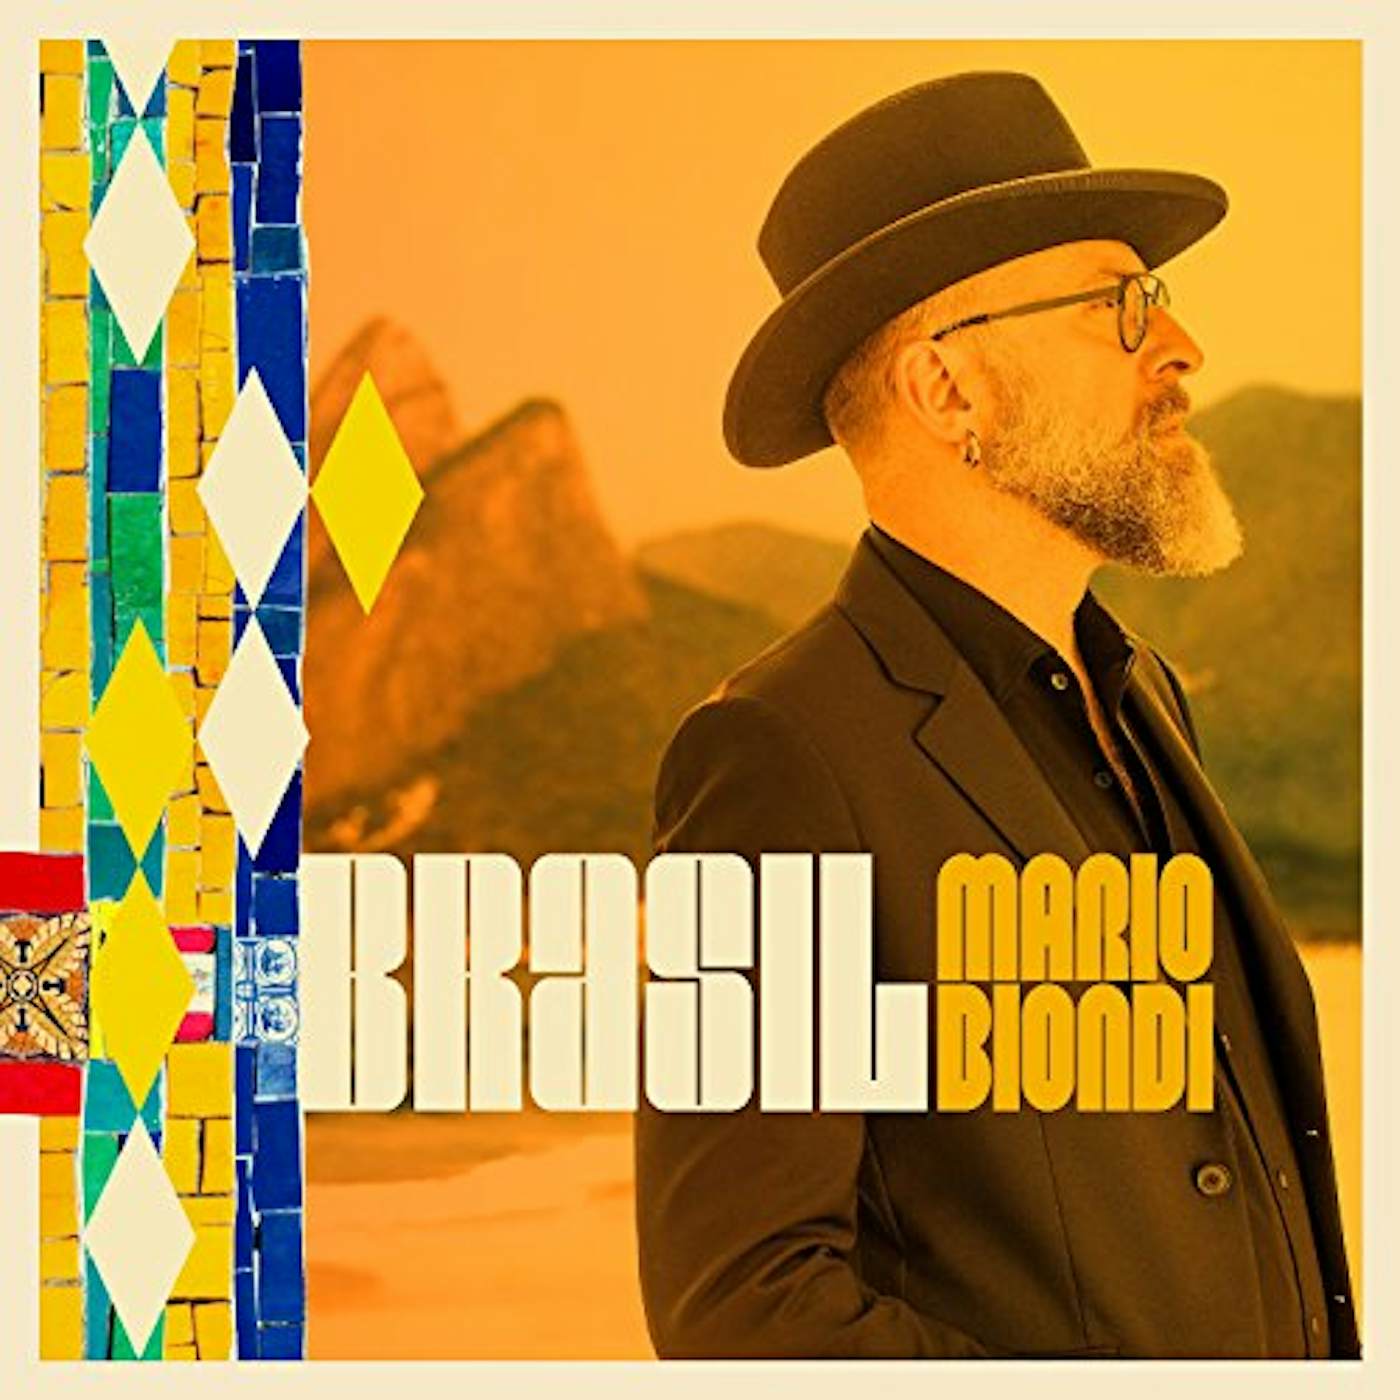 Mario Biondi Brasil Vinyl Record